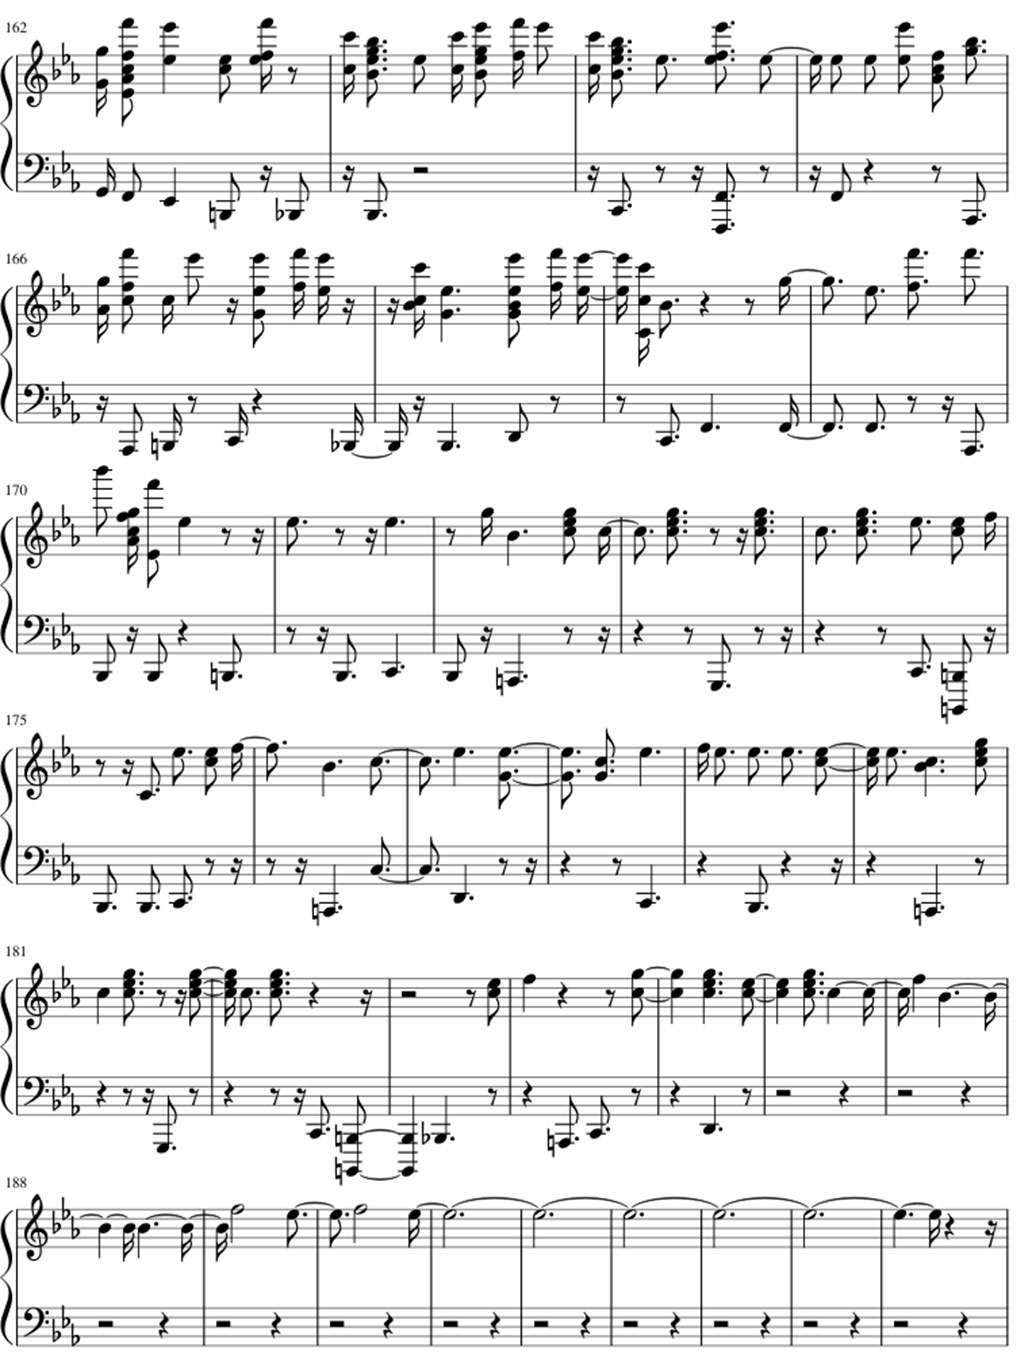 Windfall sheet music notes 7